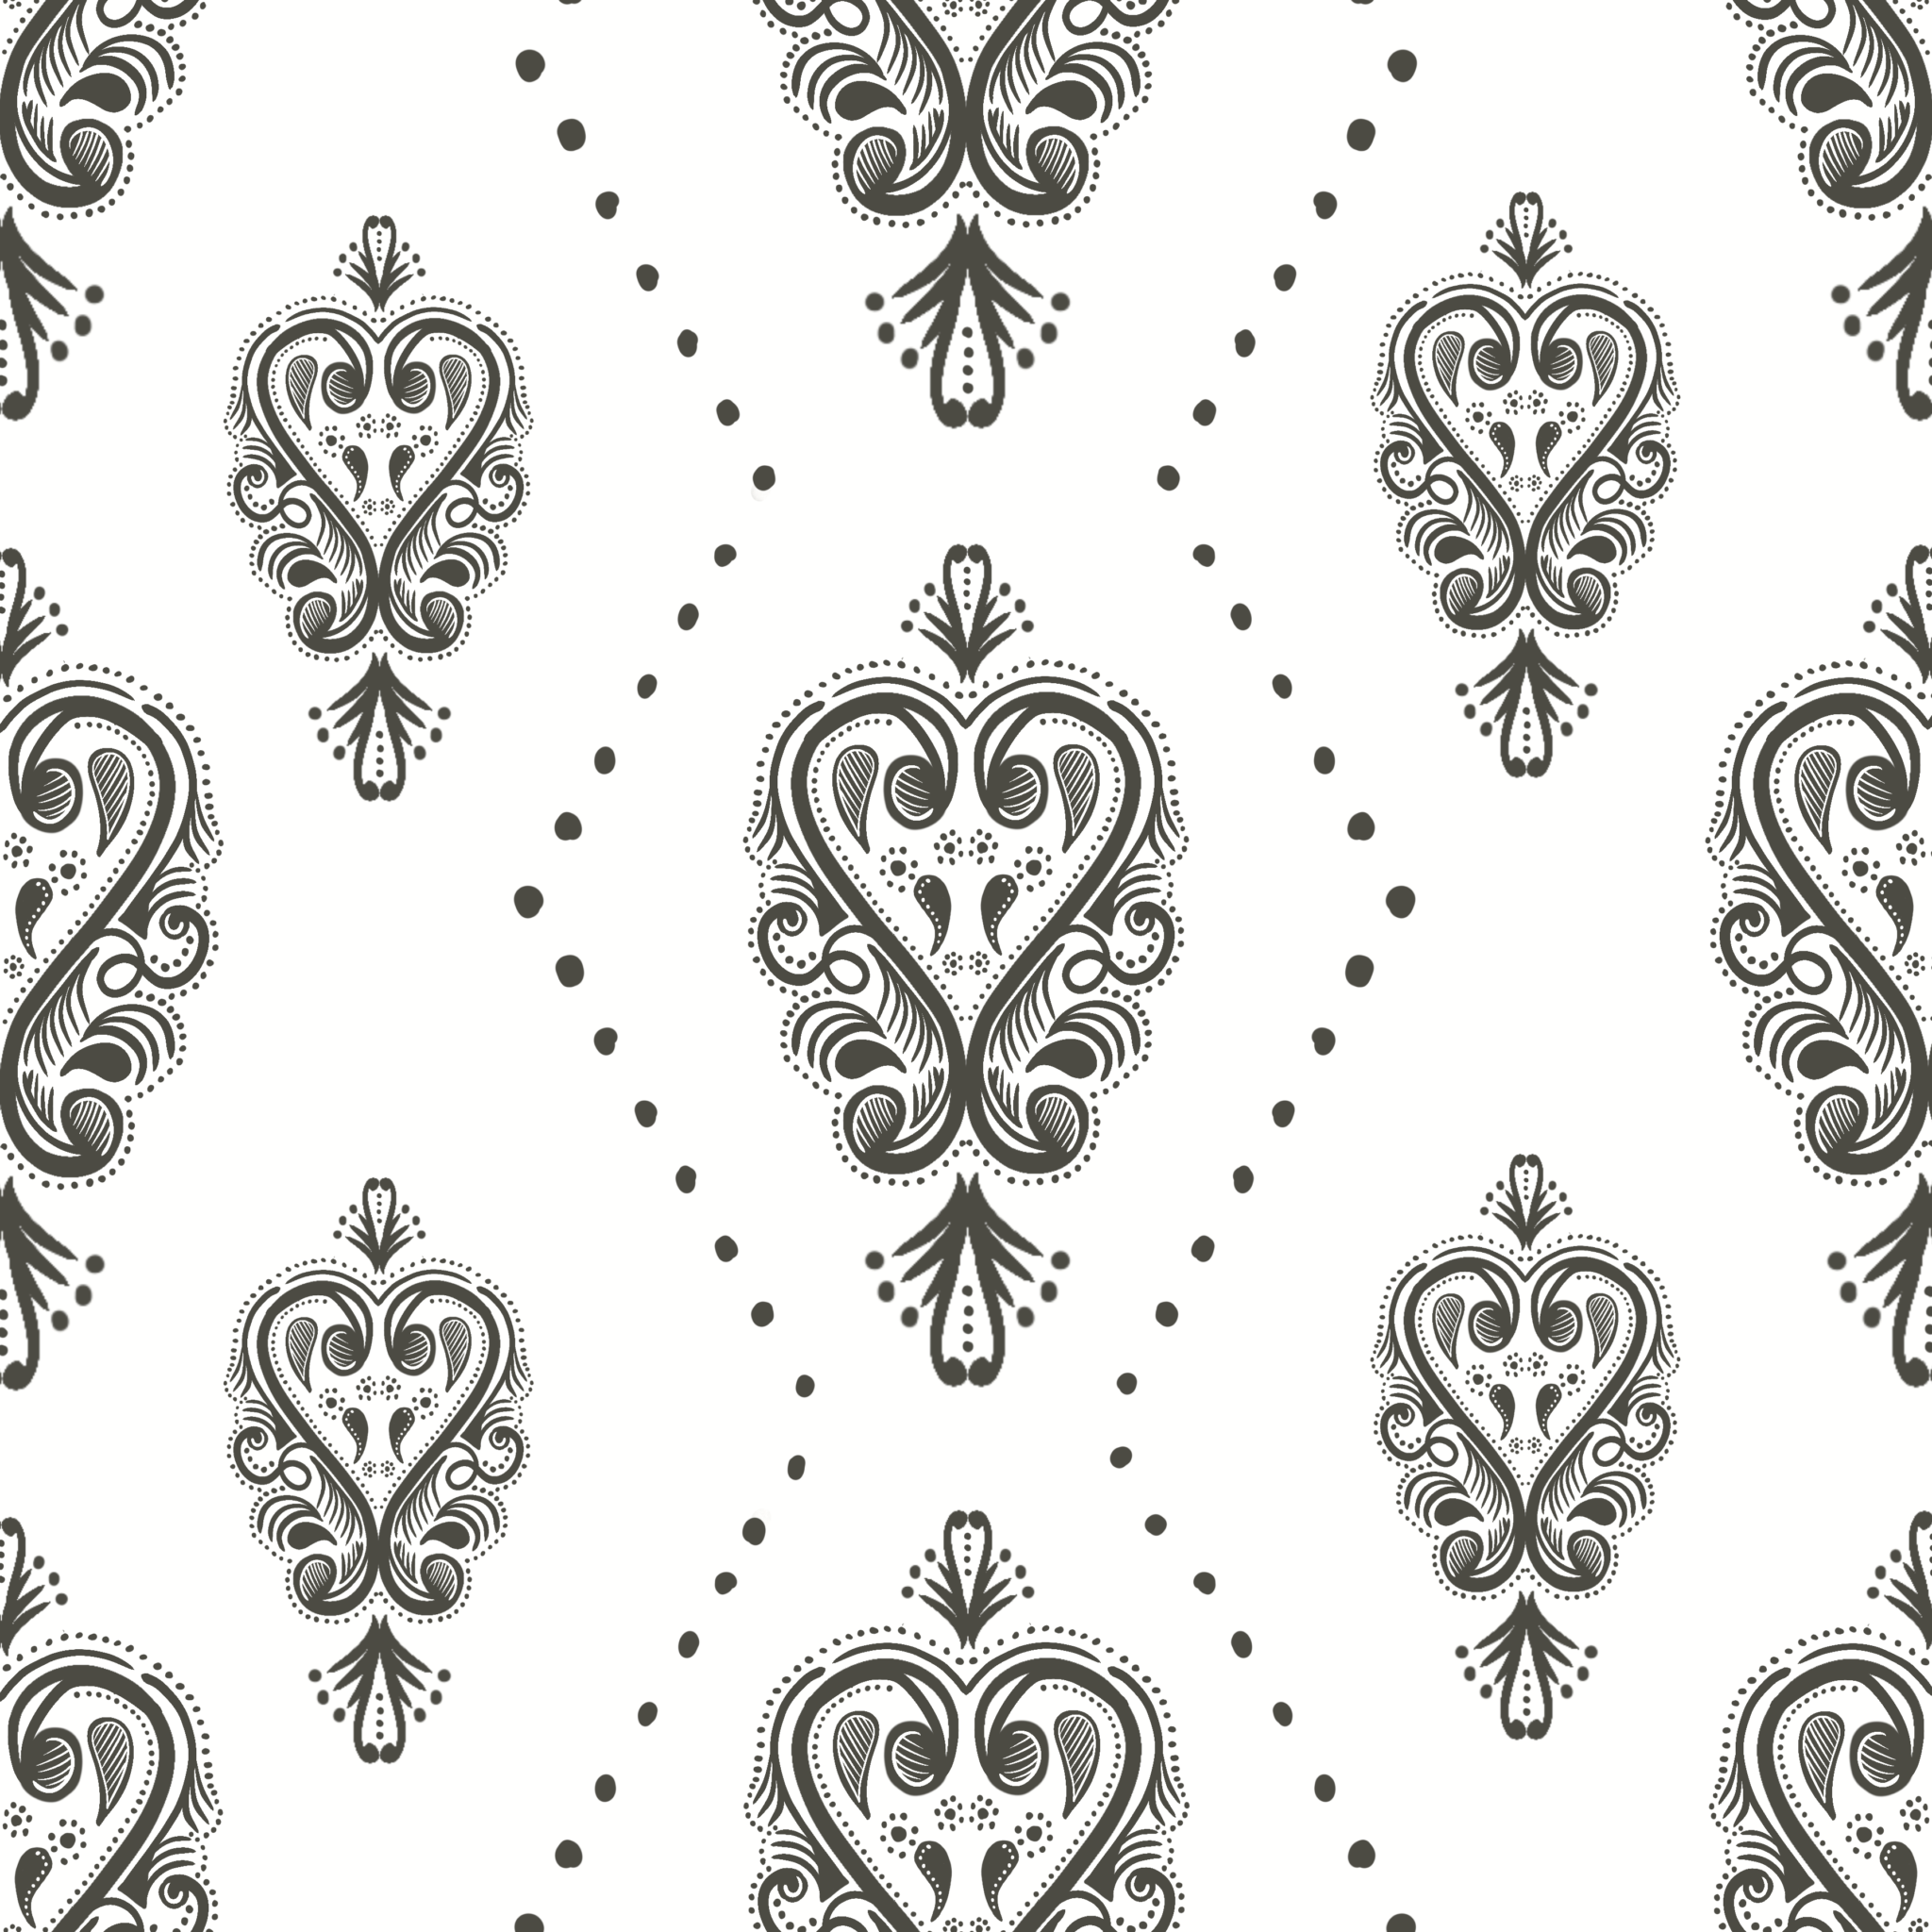 Gray flourish Surface/Pattern Design. Sold on various fullfillment sites.